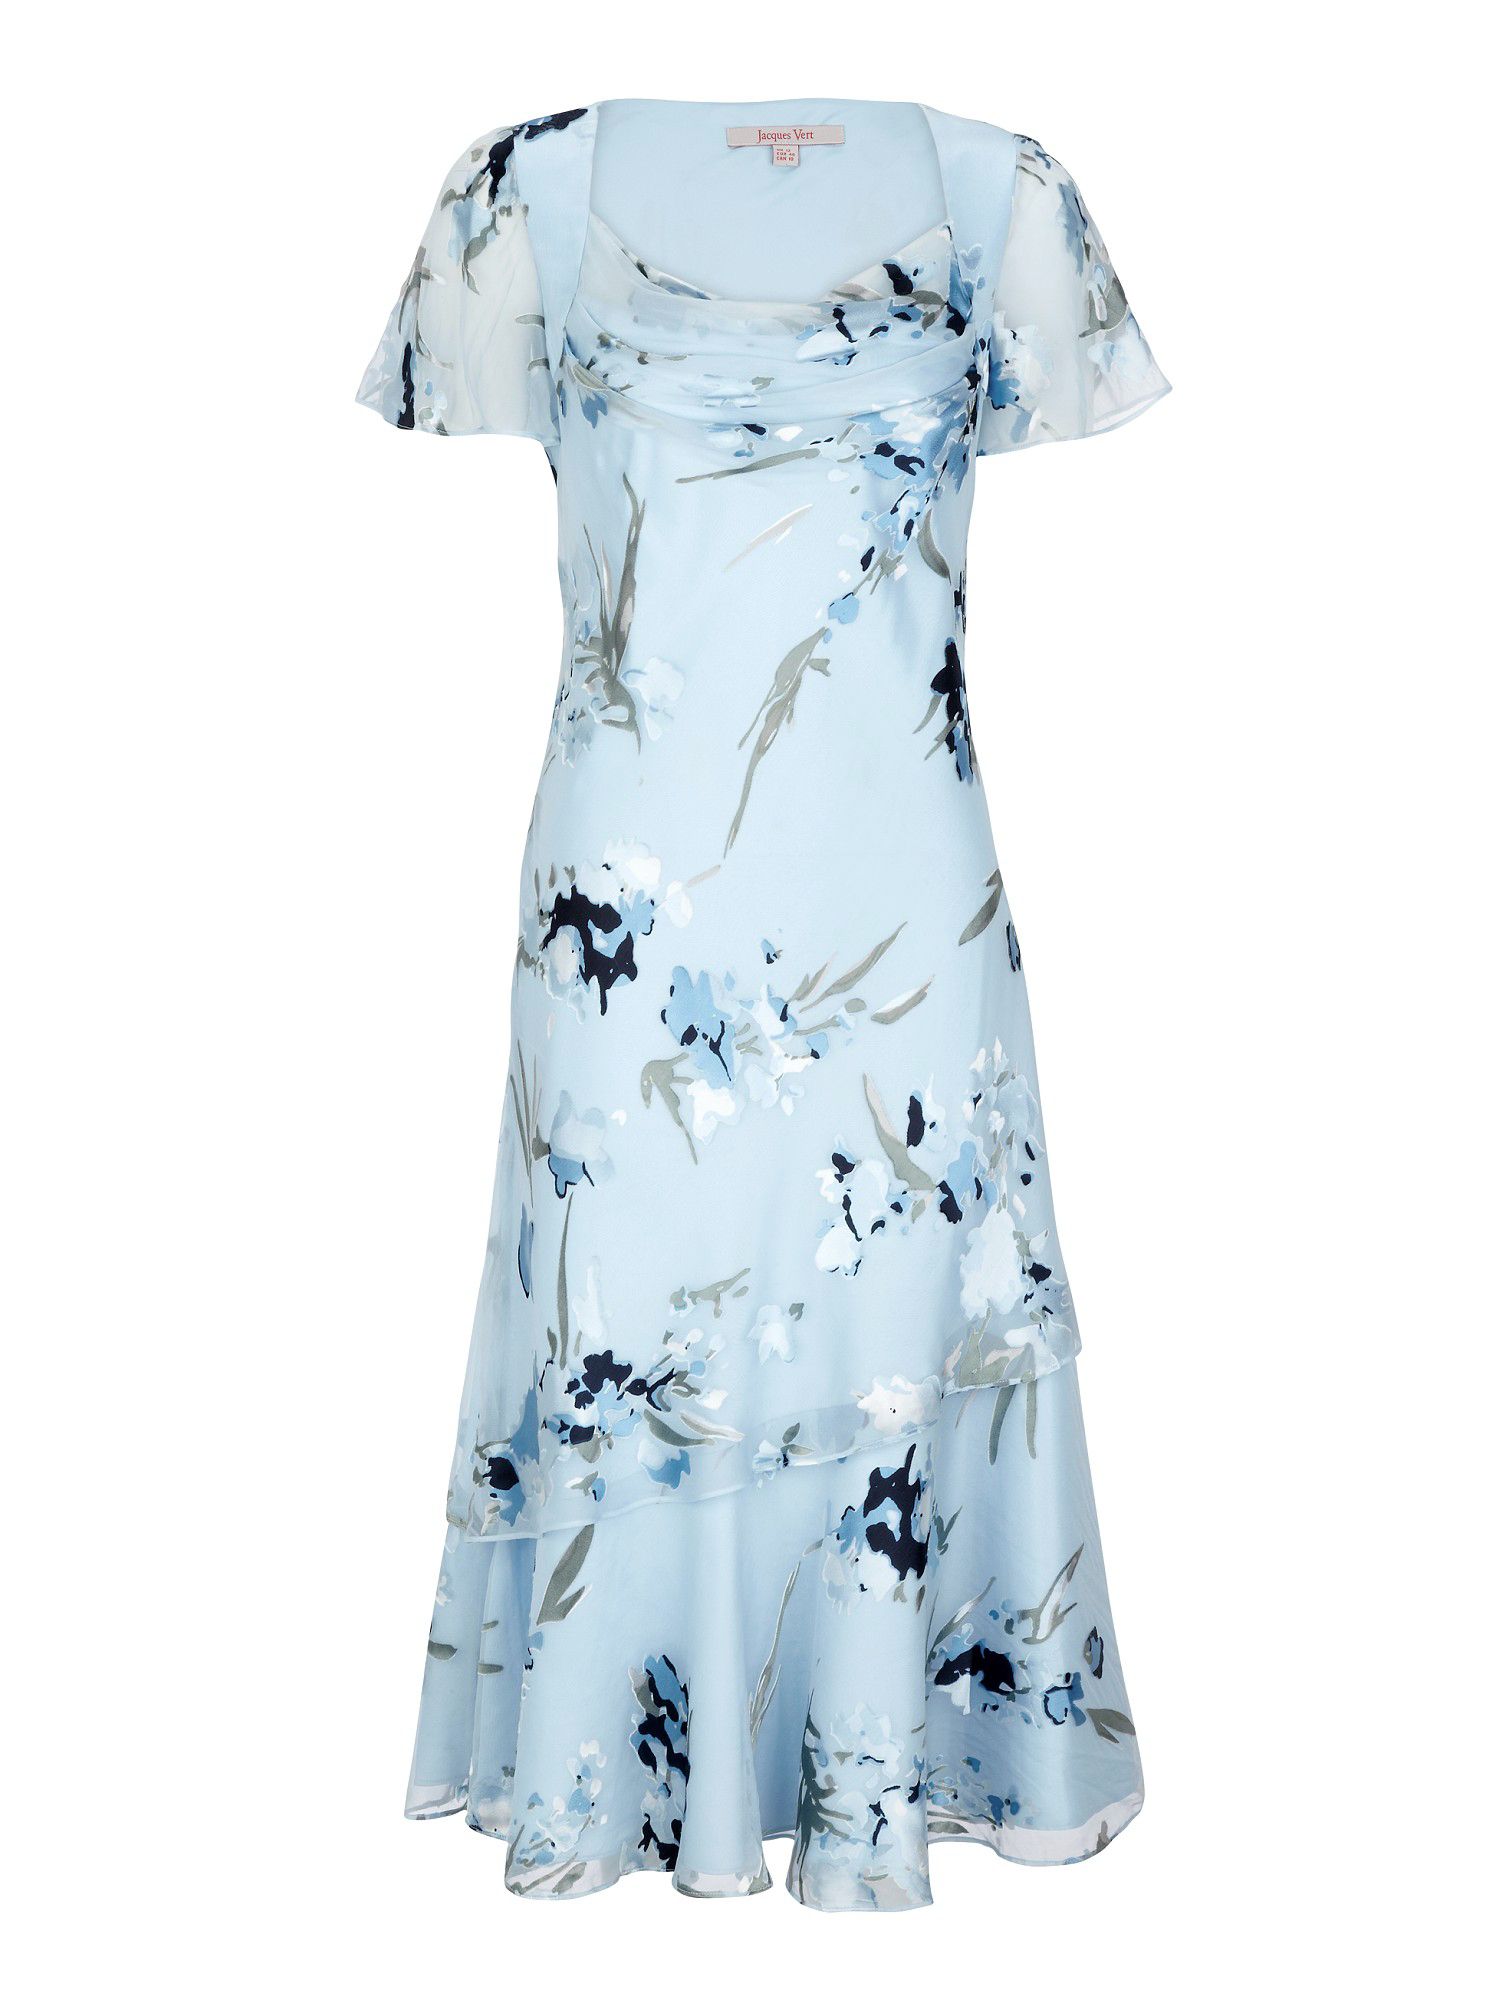 Jacques Vert Monet Devore Dress in Blue | Lyst